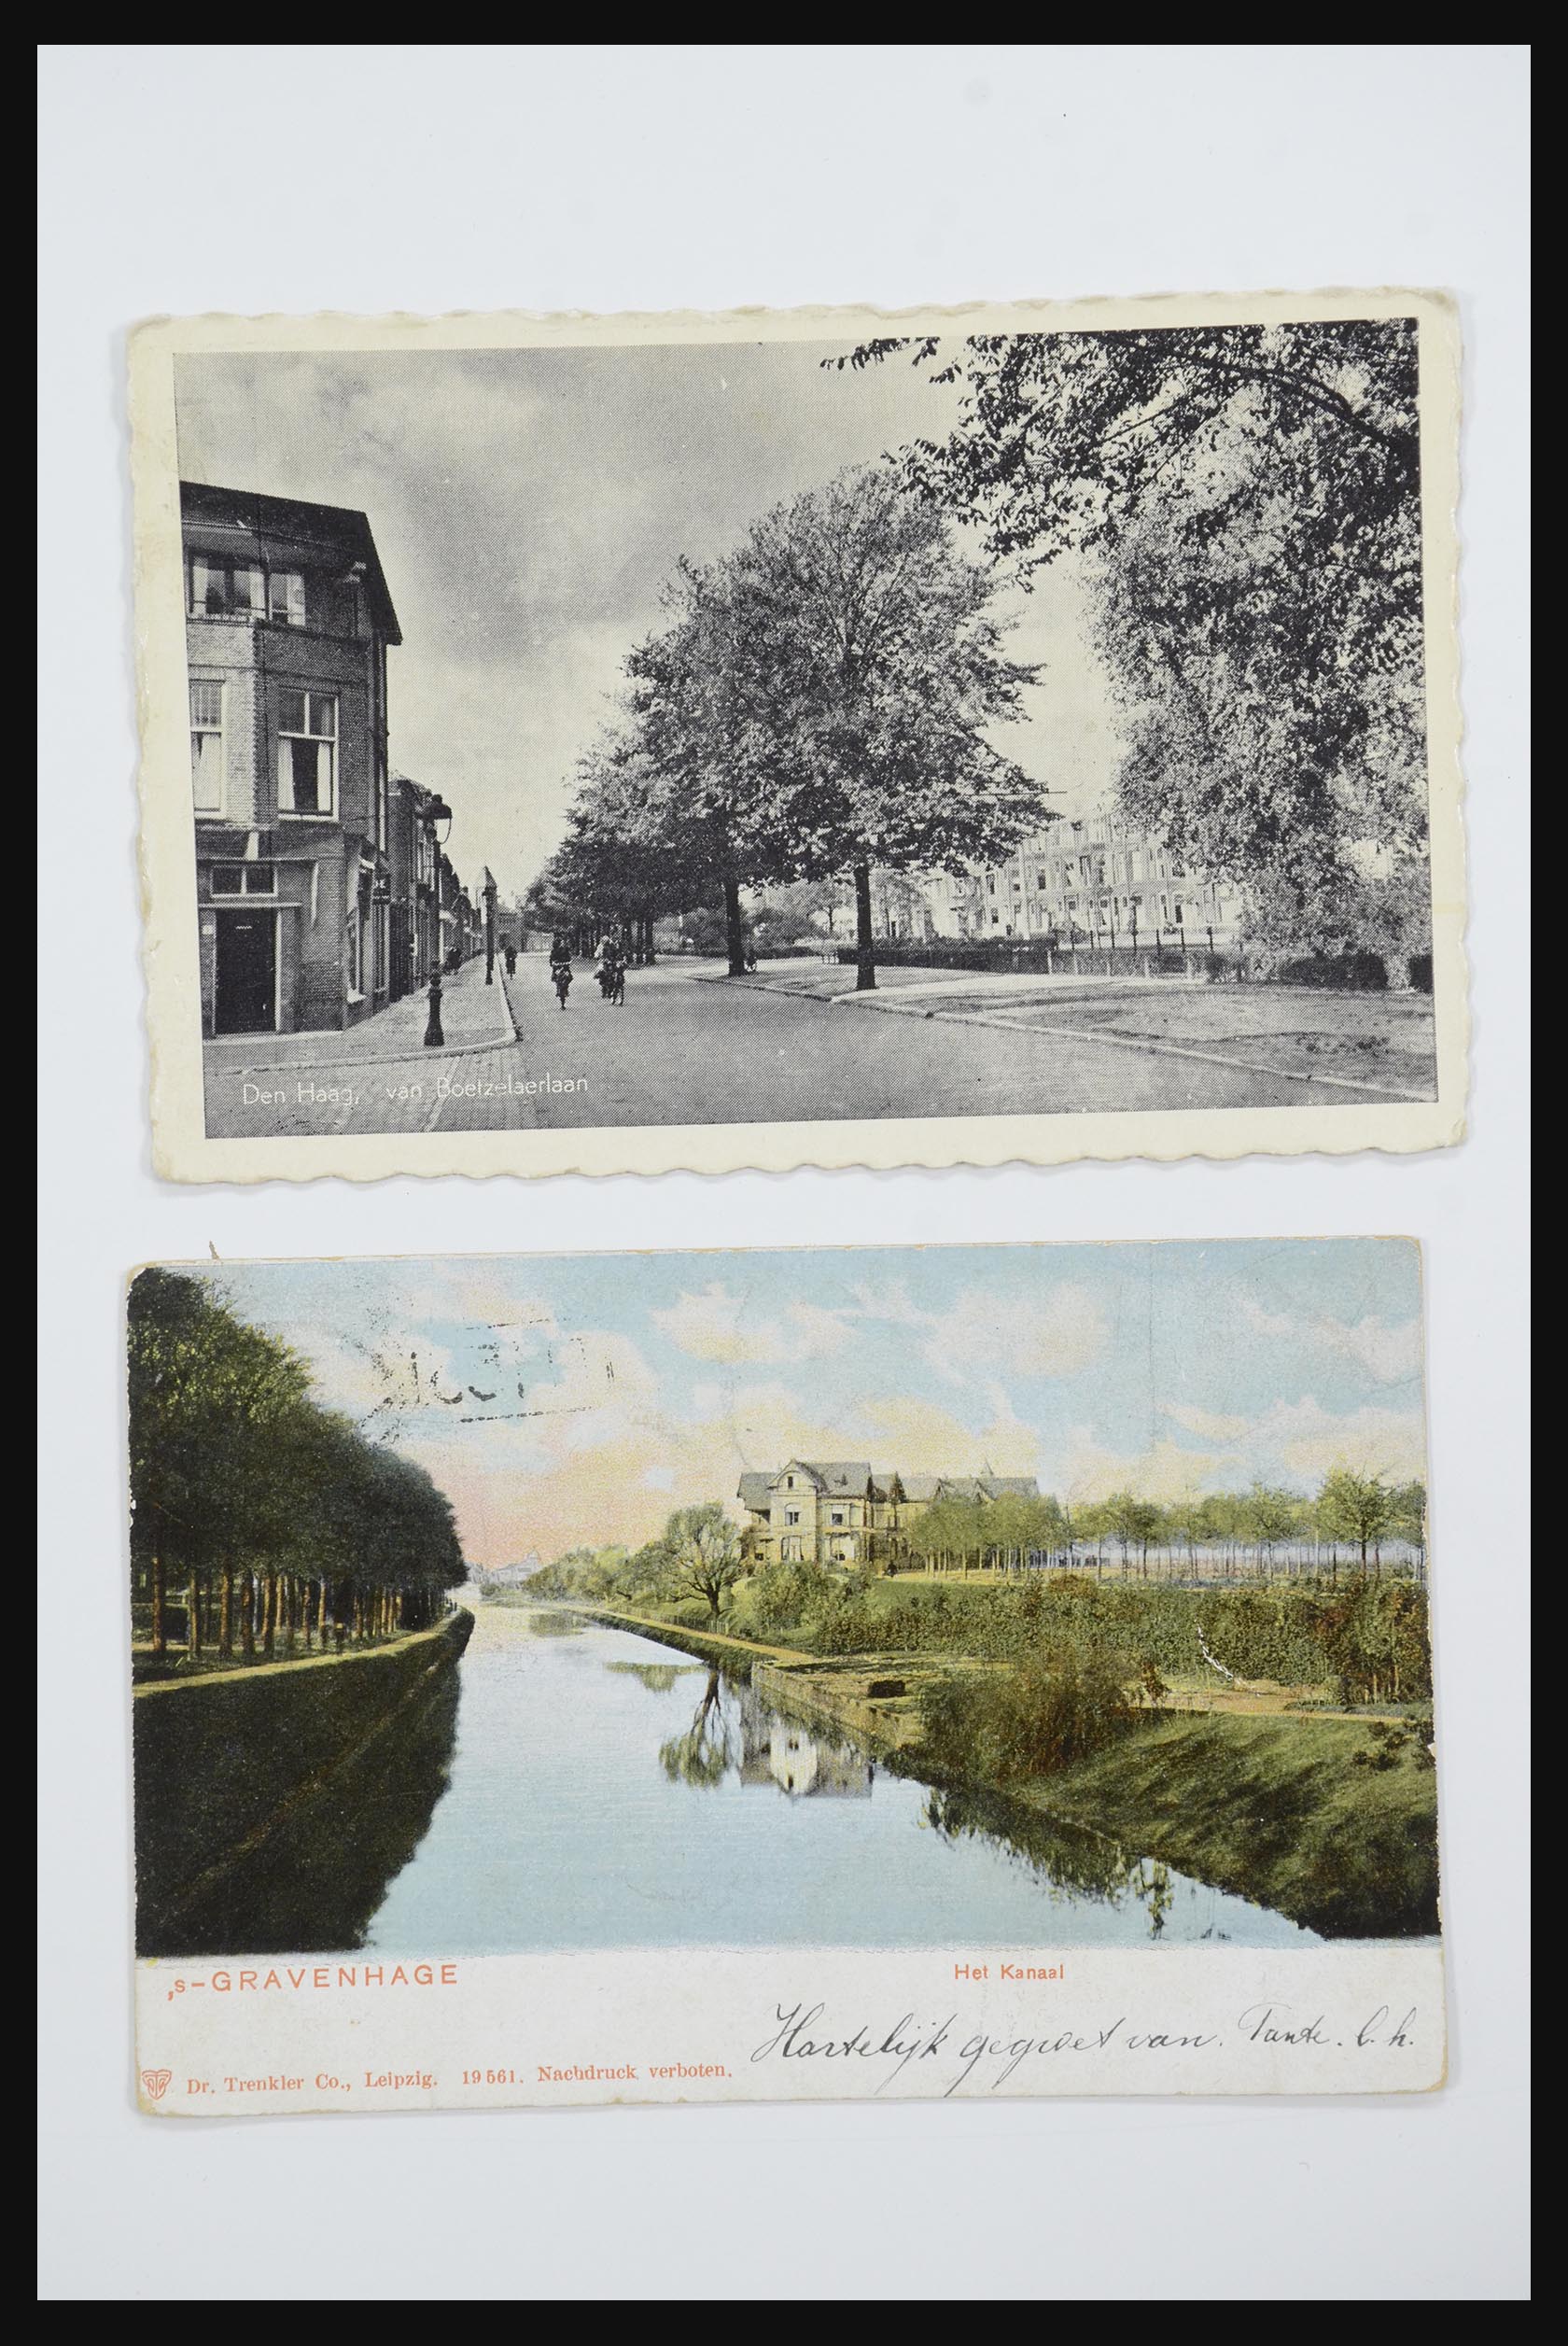 31868 055 - 31868 Netherlands picture postcards.